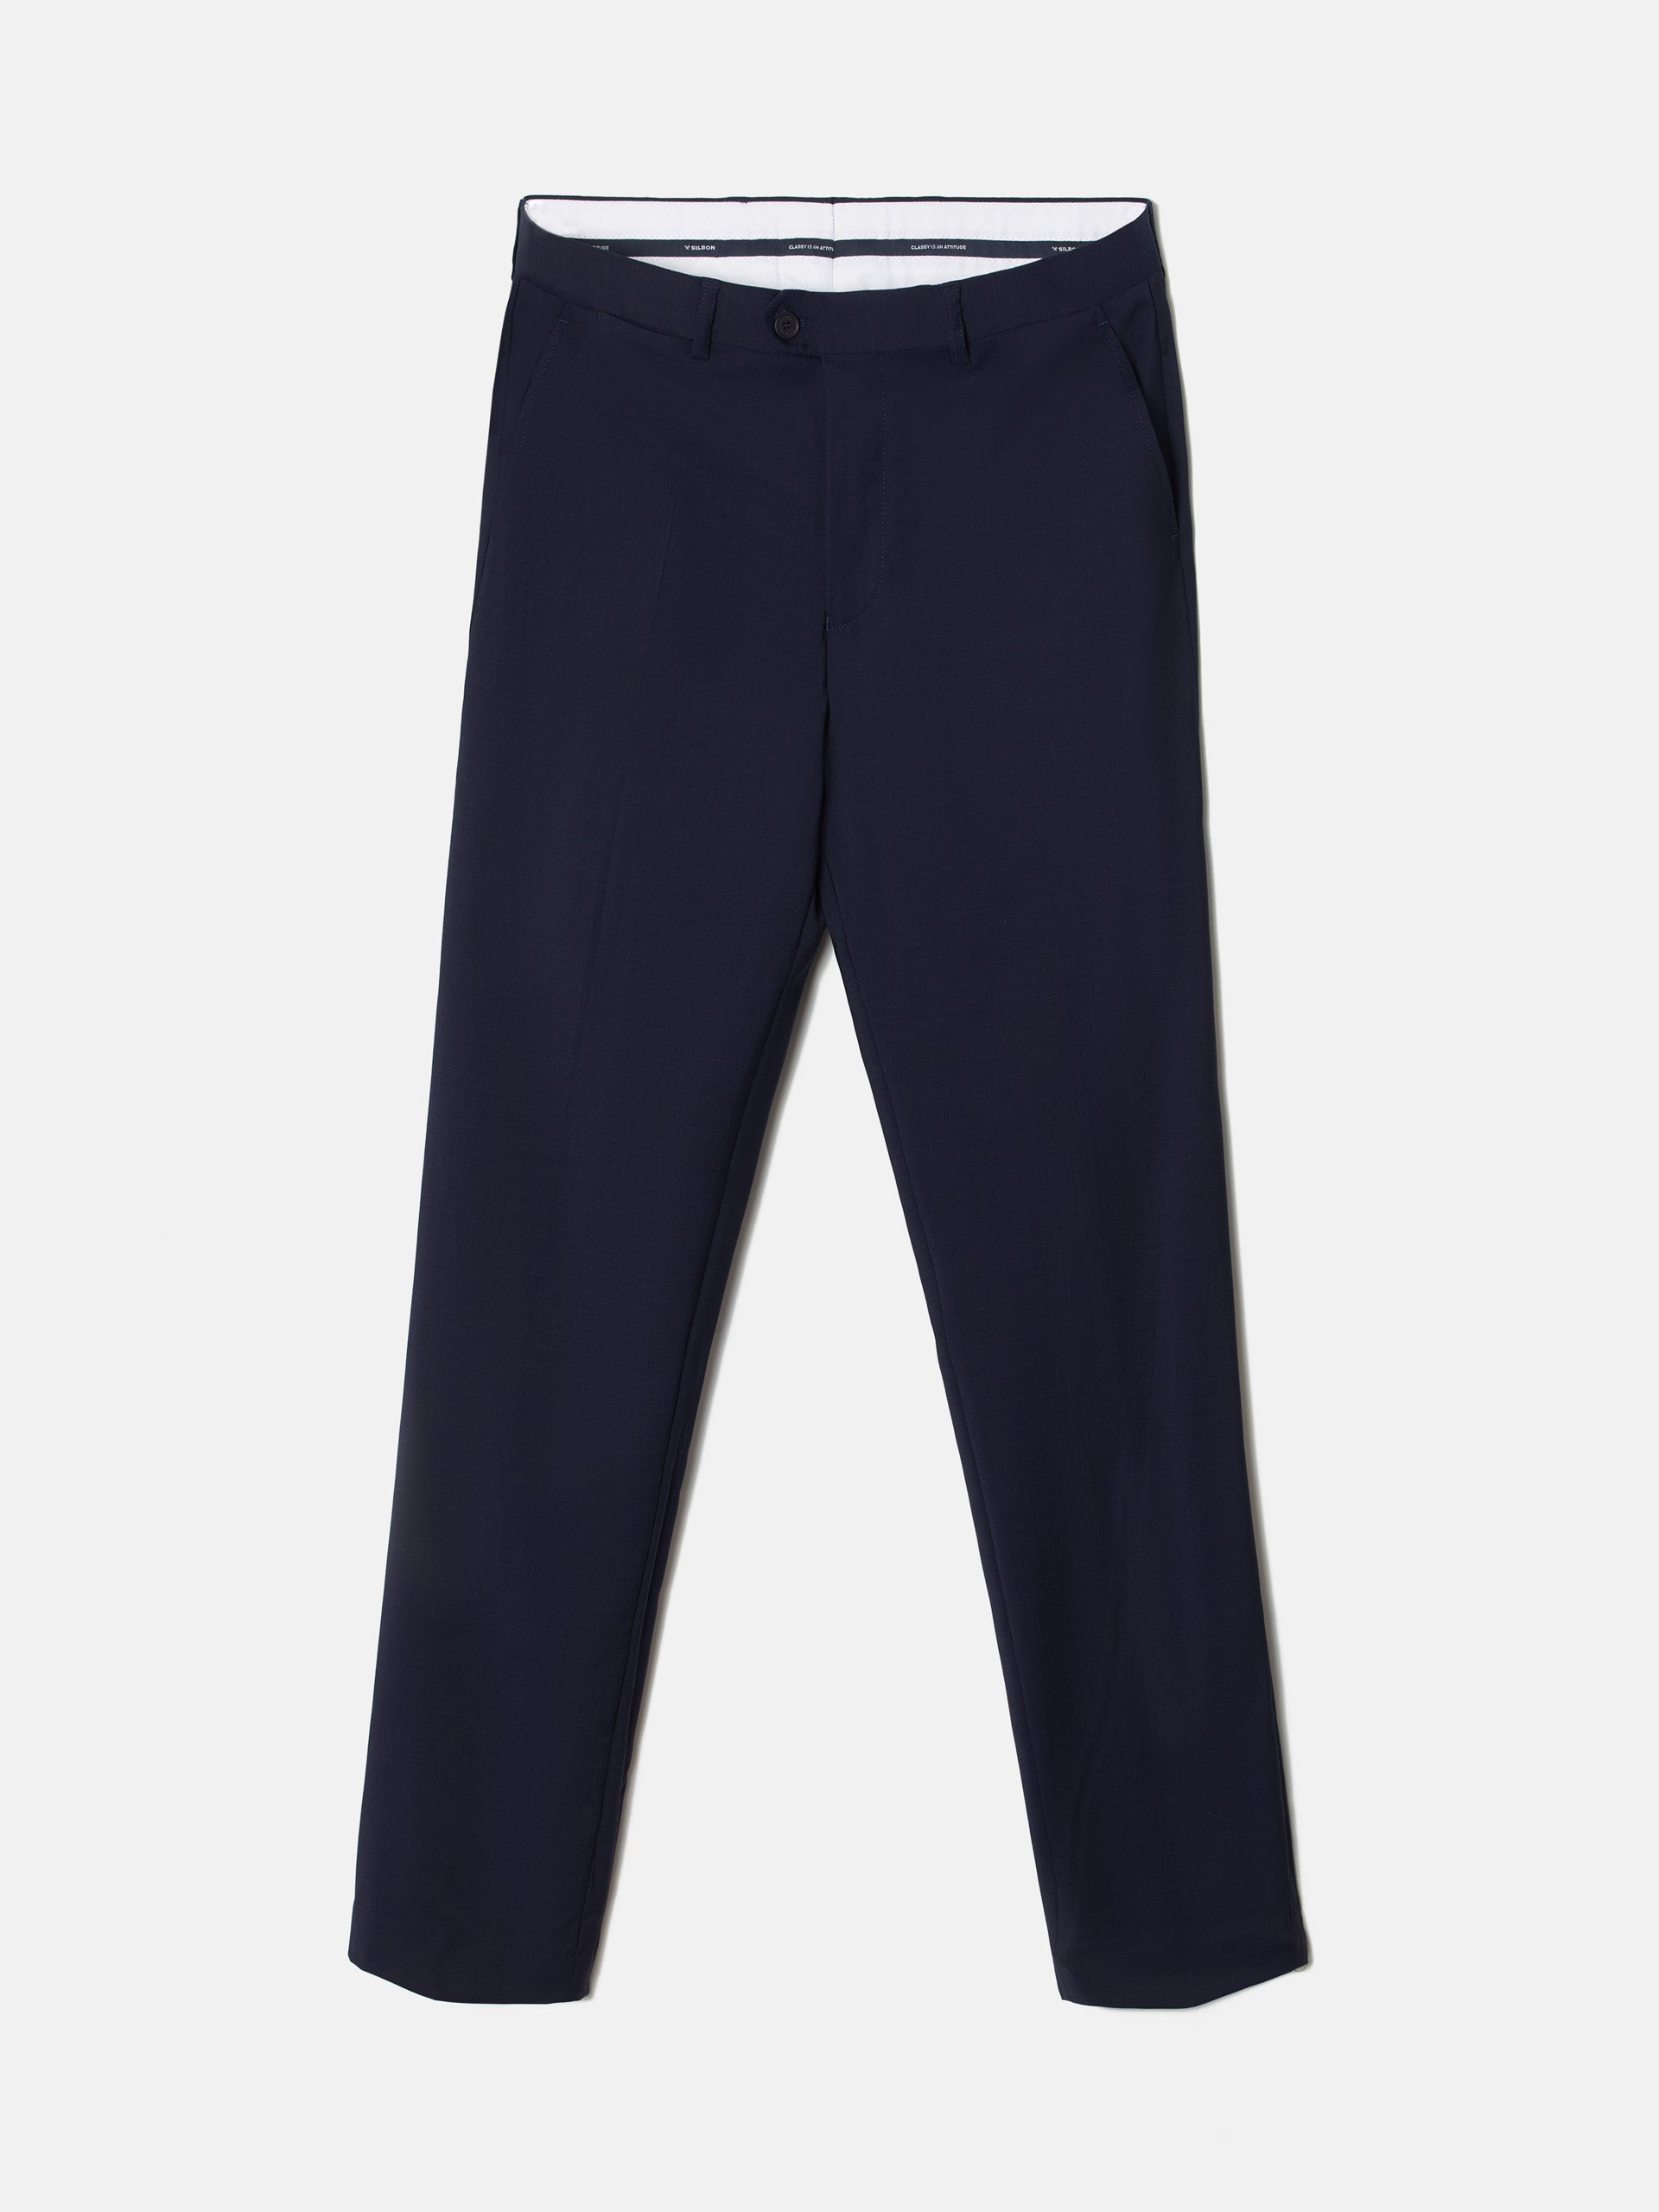 Natural stretch navy blue suit pants